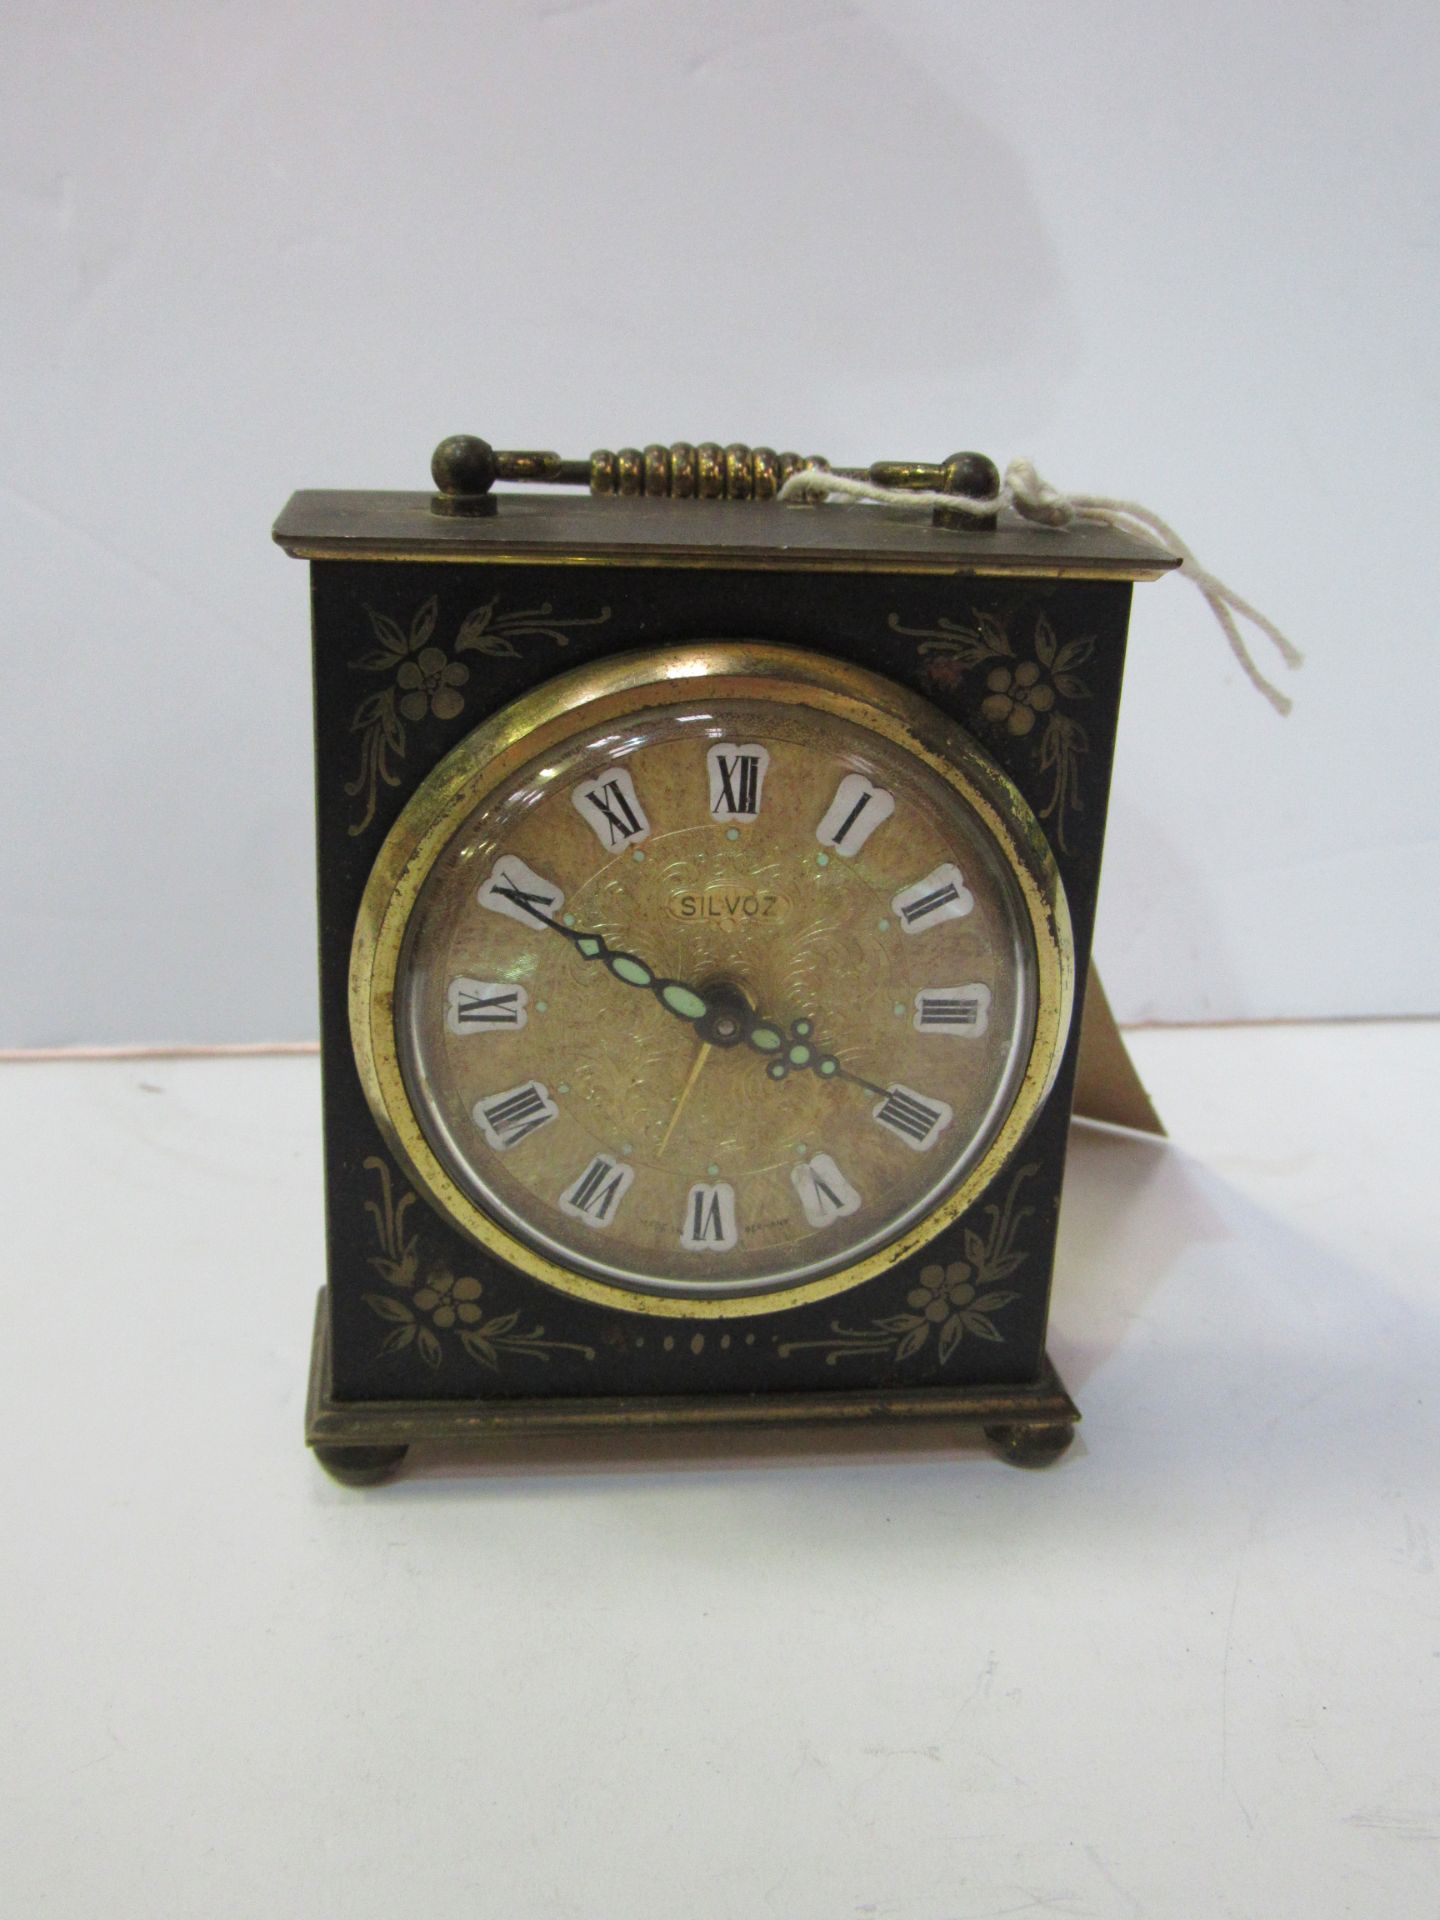 Miniature mantel clock with alarm by Silvoz, Germany.